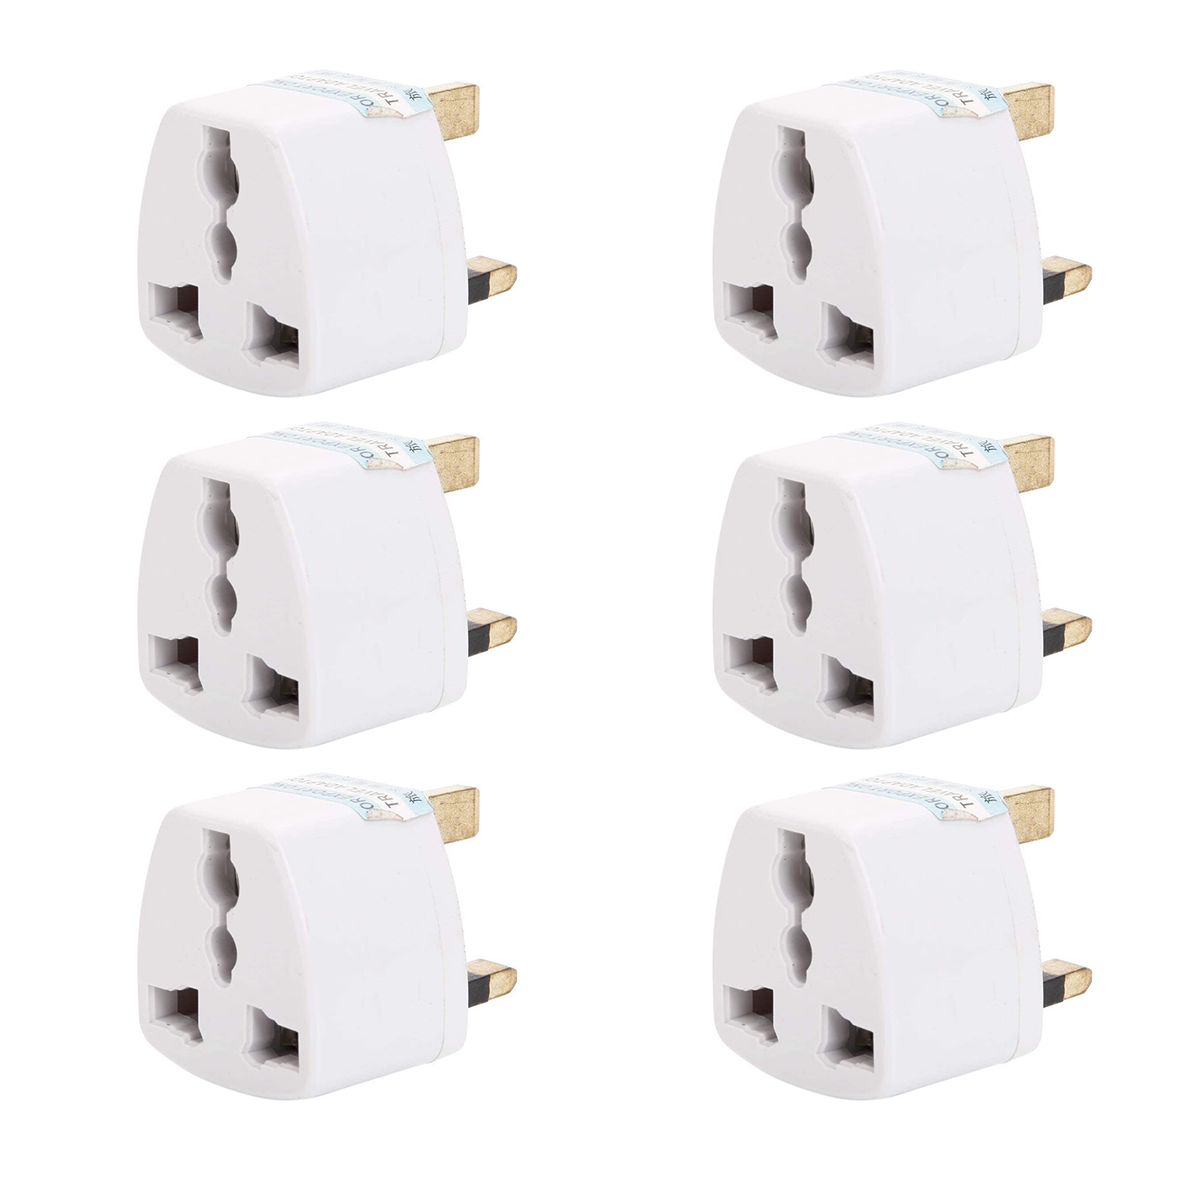 Universal AU US EU to UK AC Power Plug Travel Adapter Outlet Converter Socket (6Pc Set)